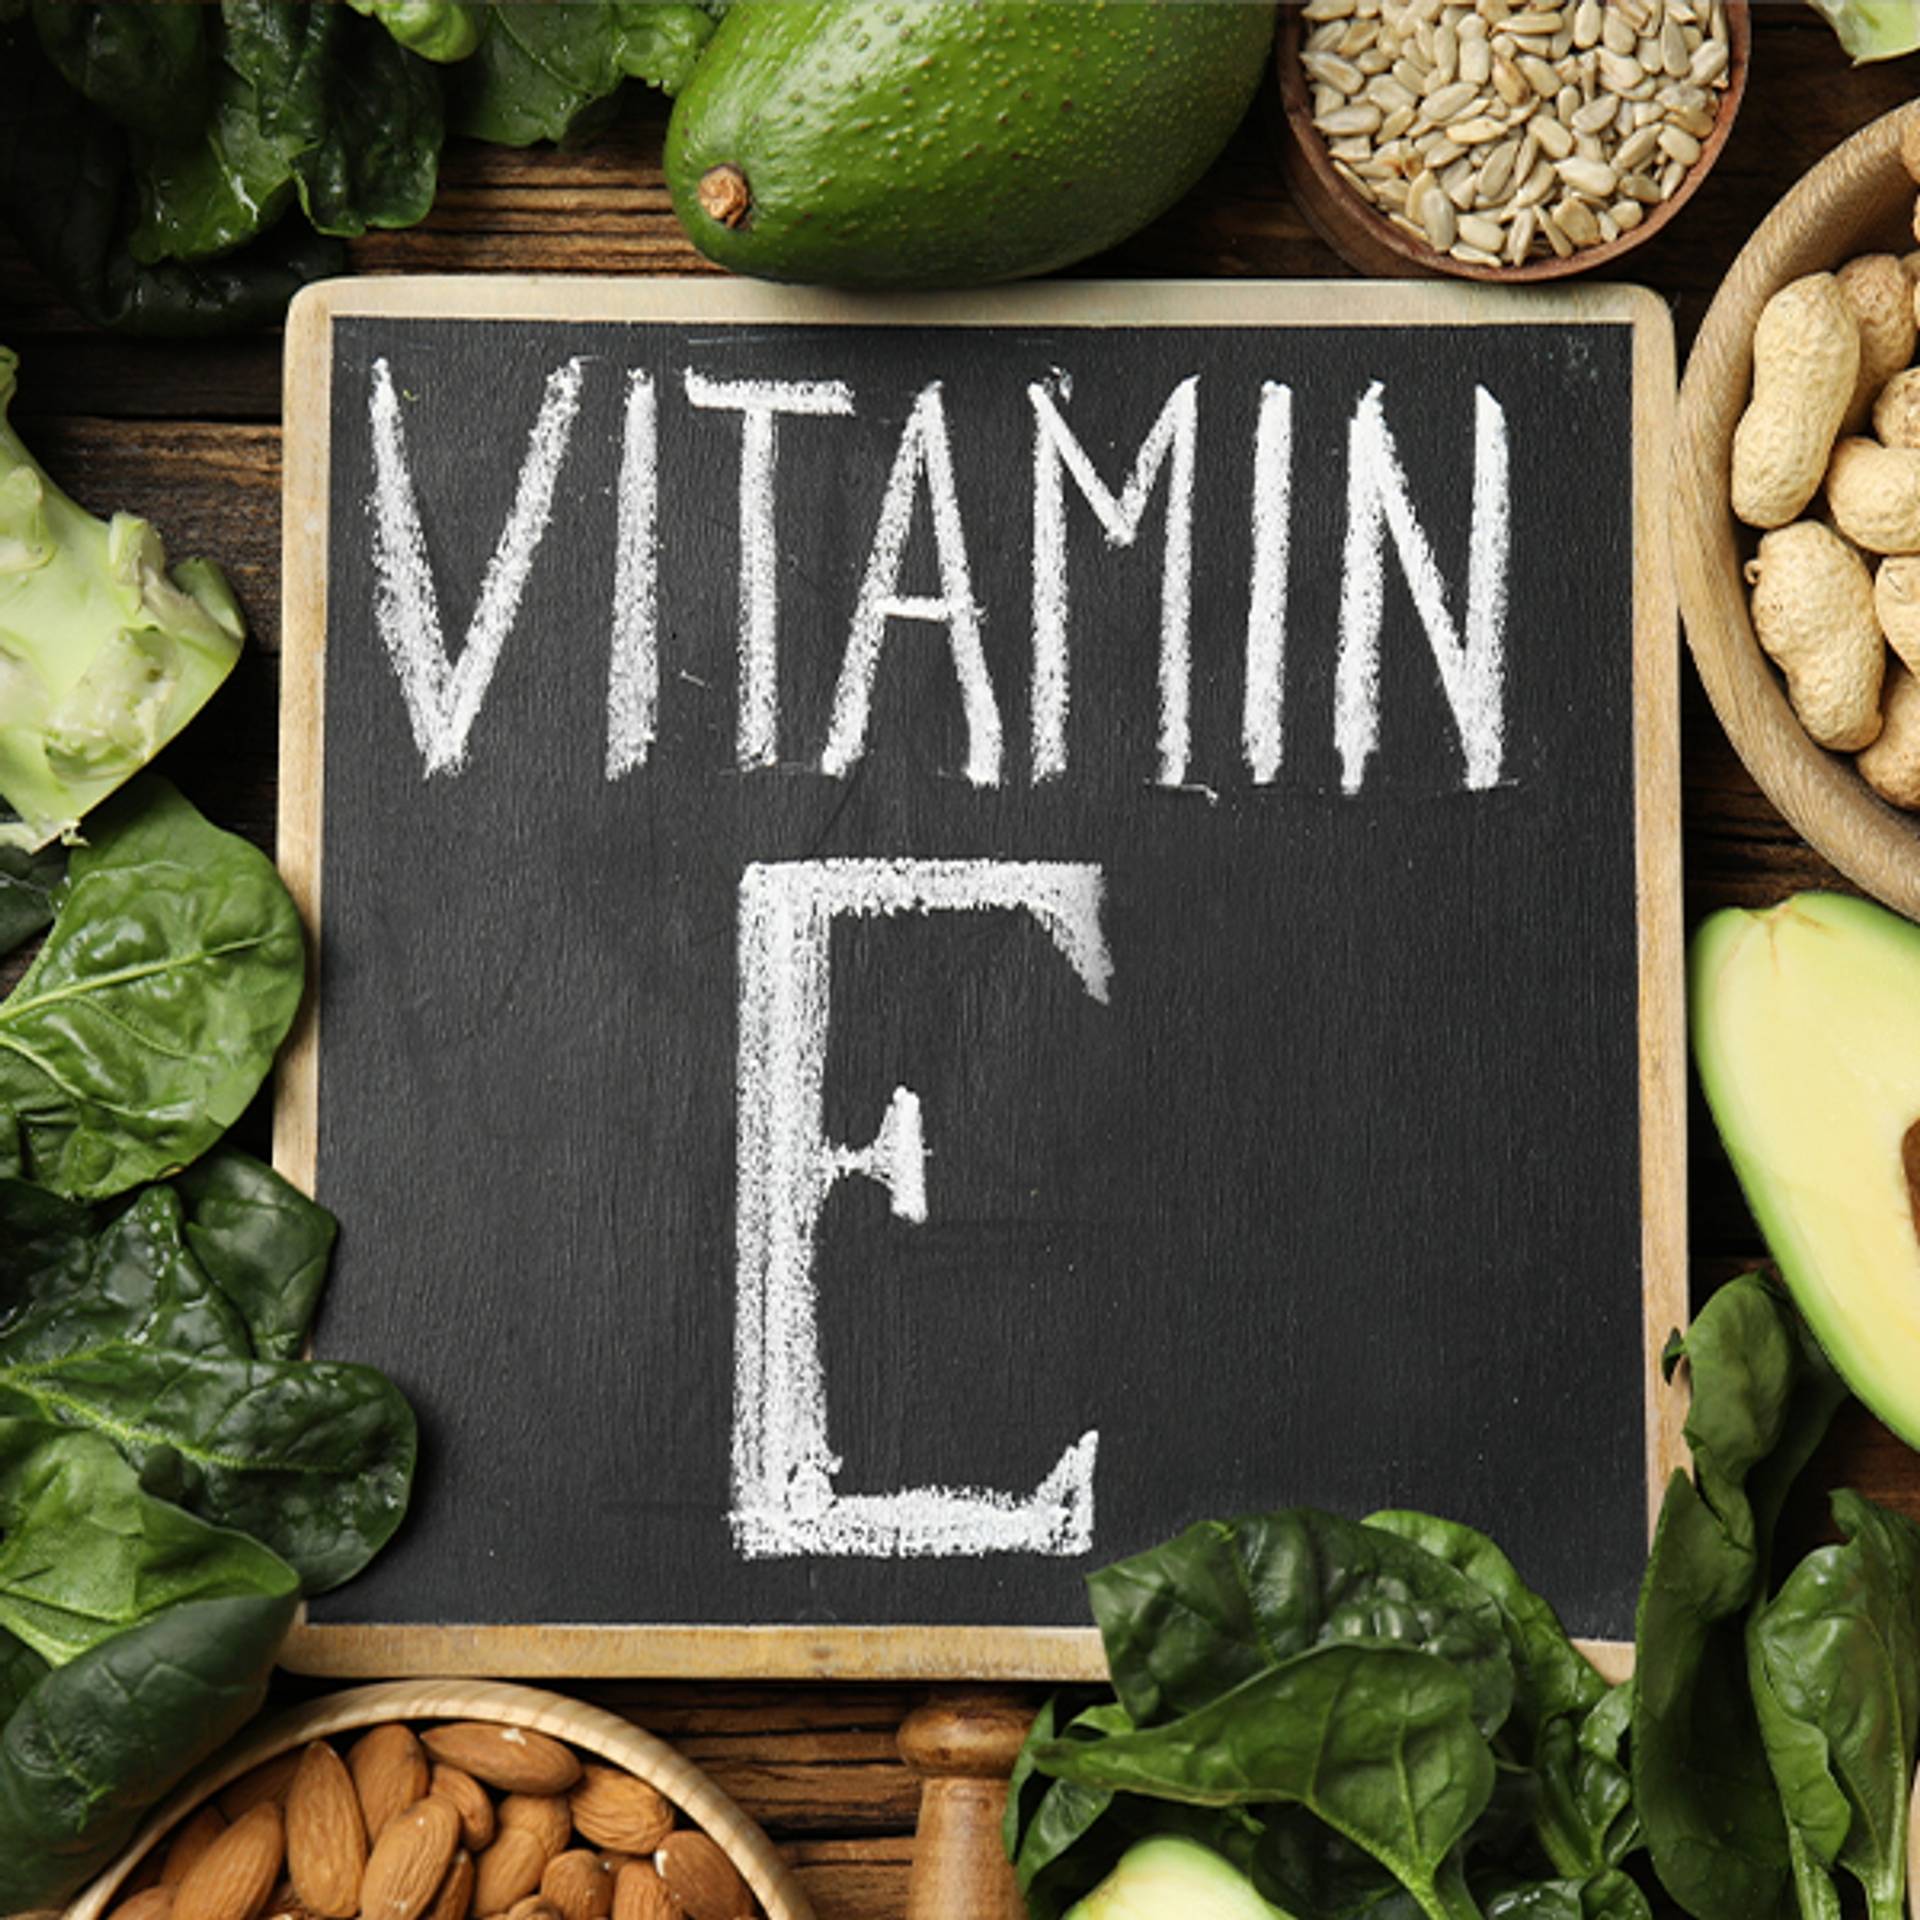 Vitamin E - The healthy fountain of youth